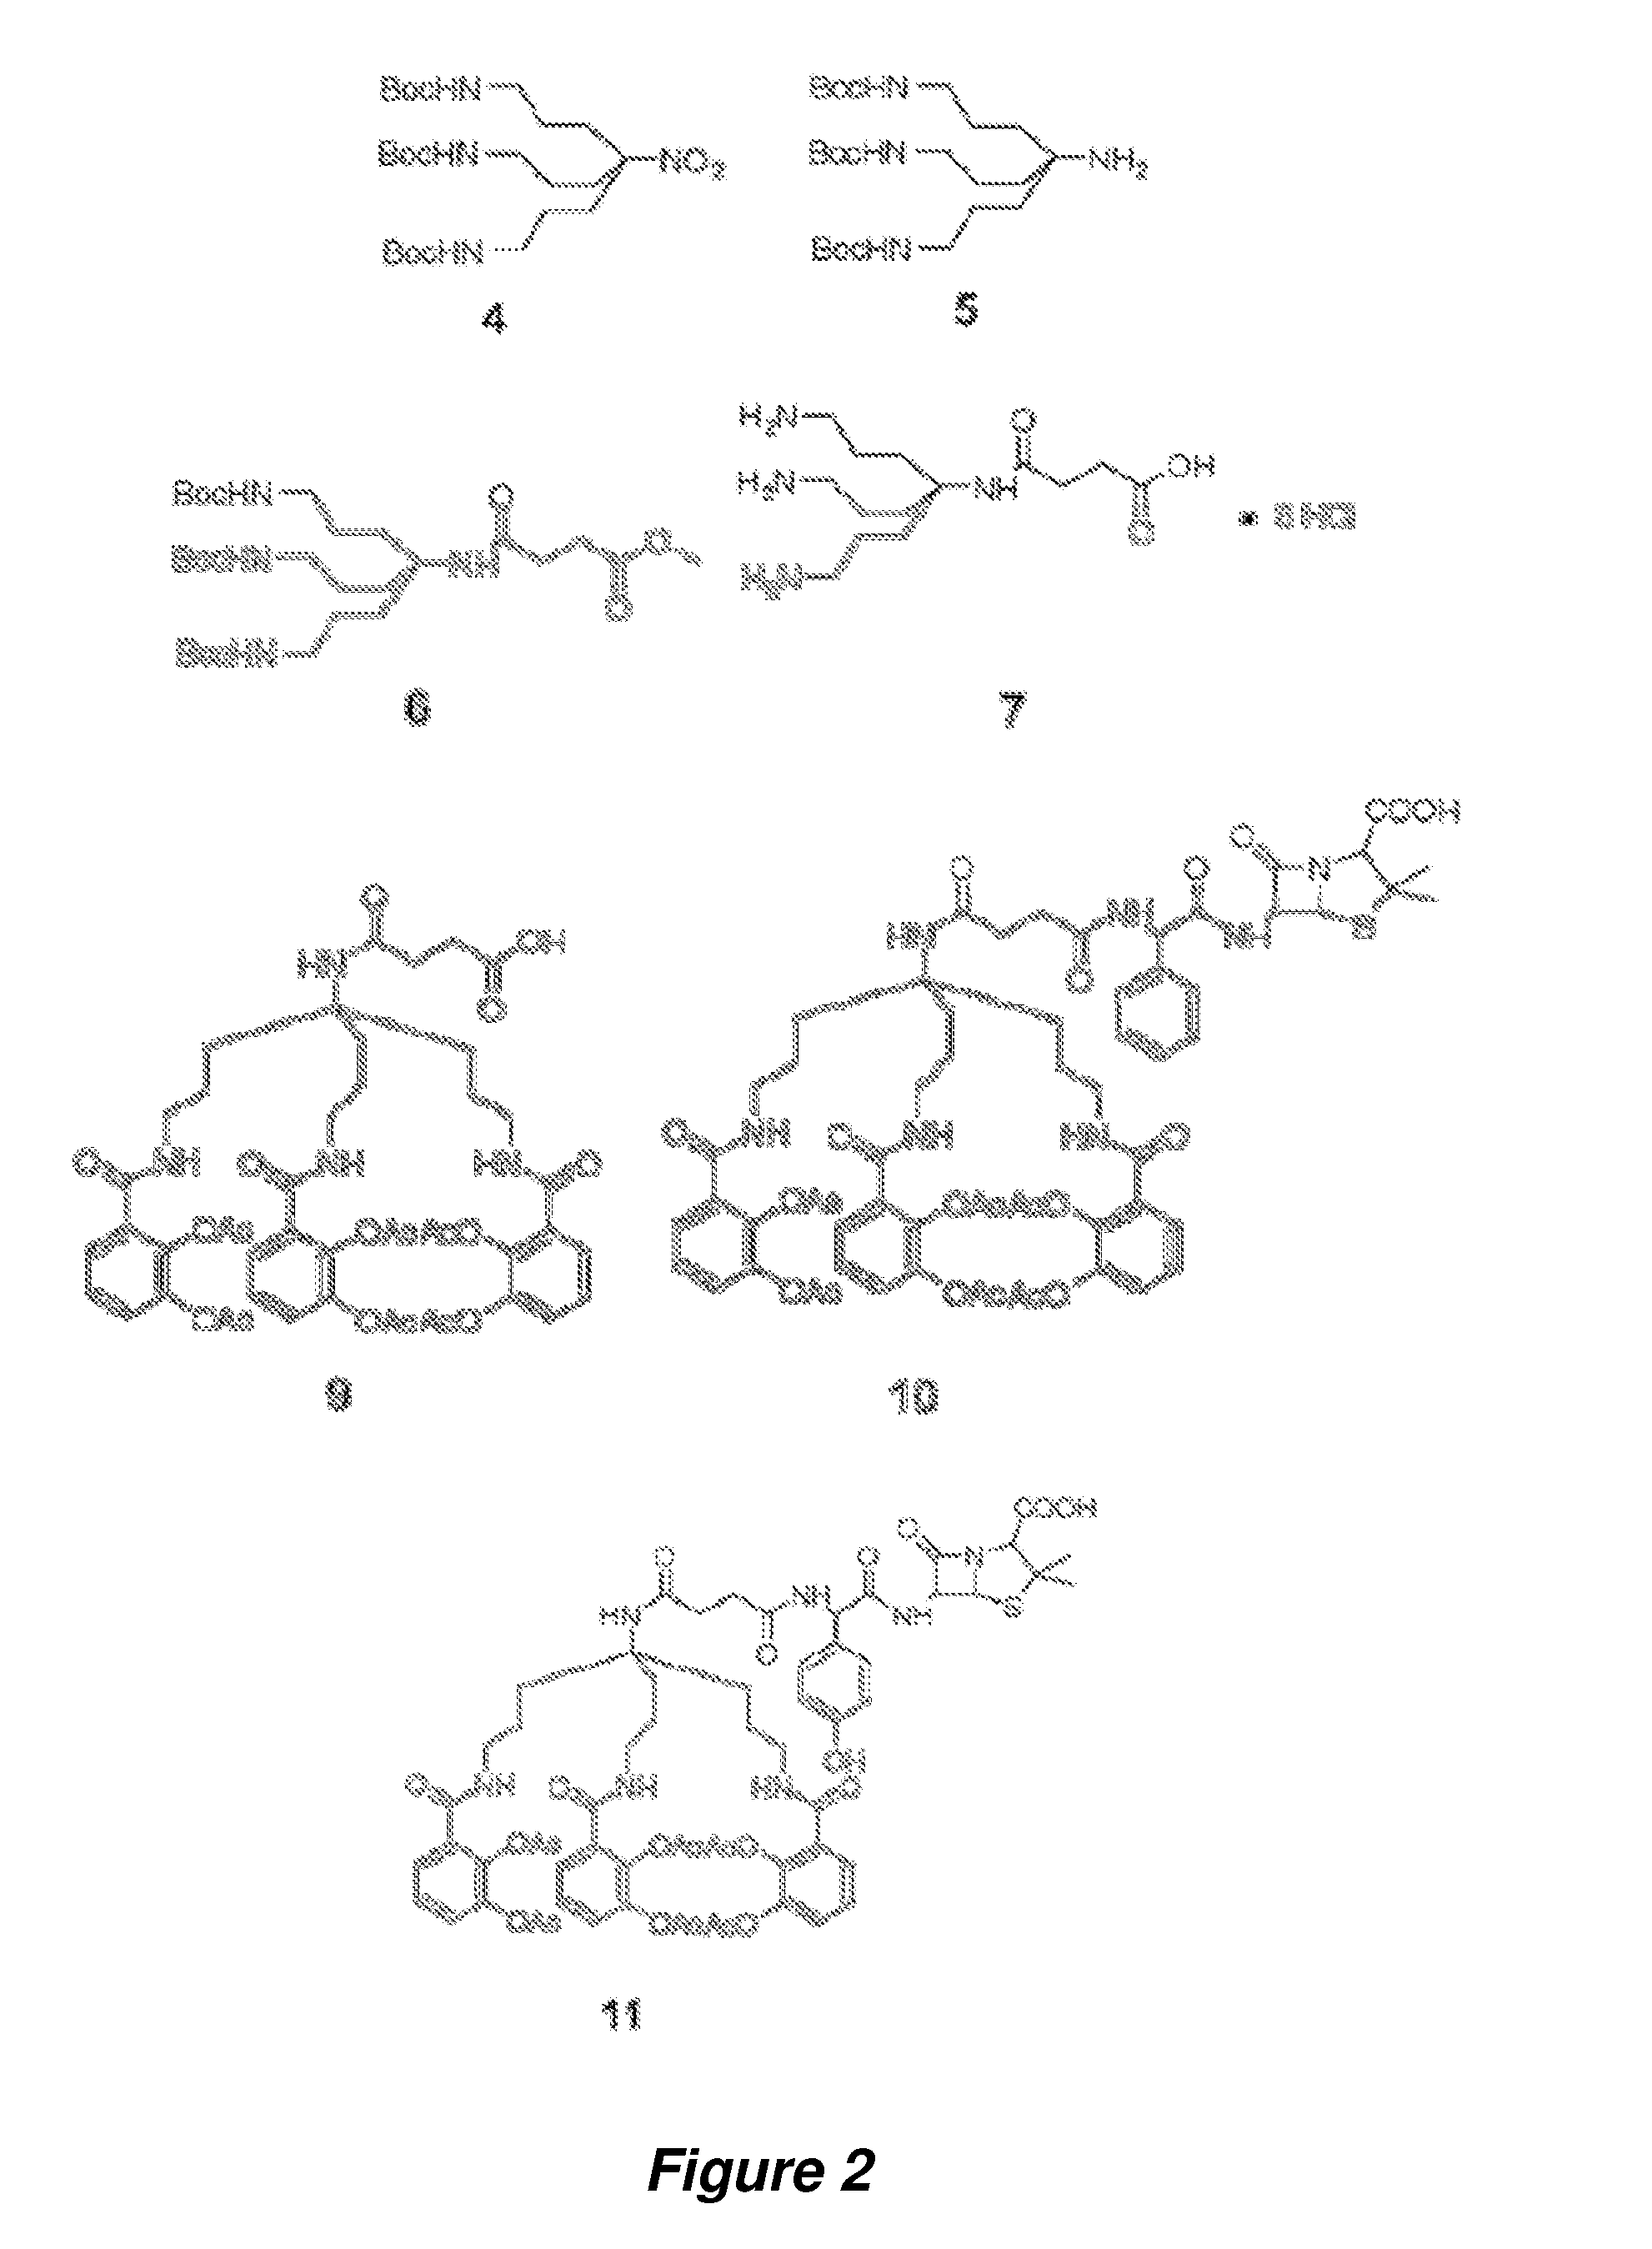 Anti-bacterial siderophore-aminopenicillin conjugates